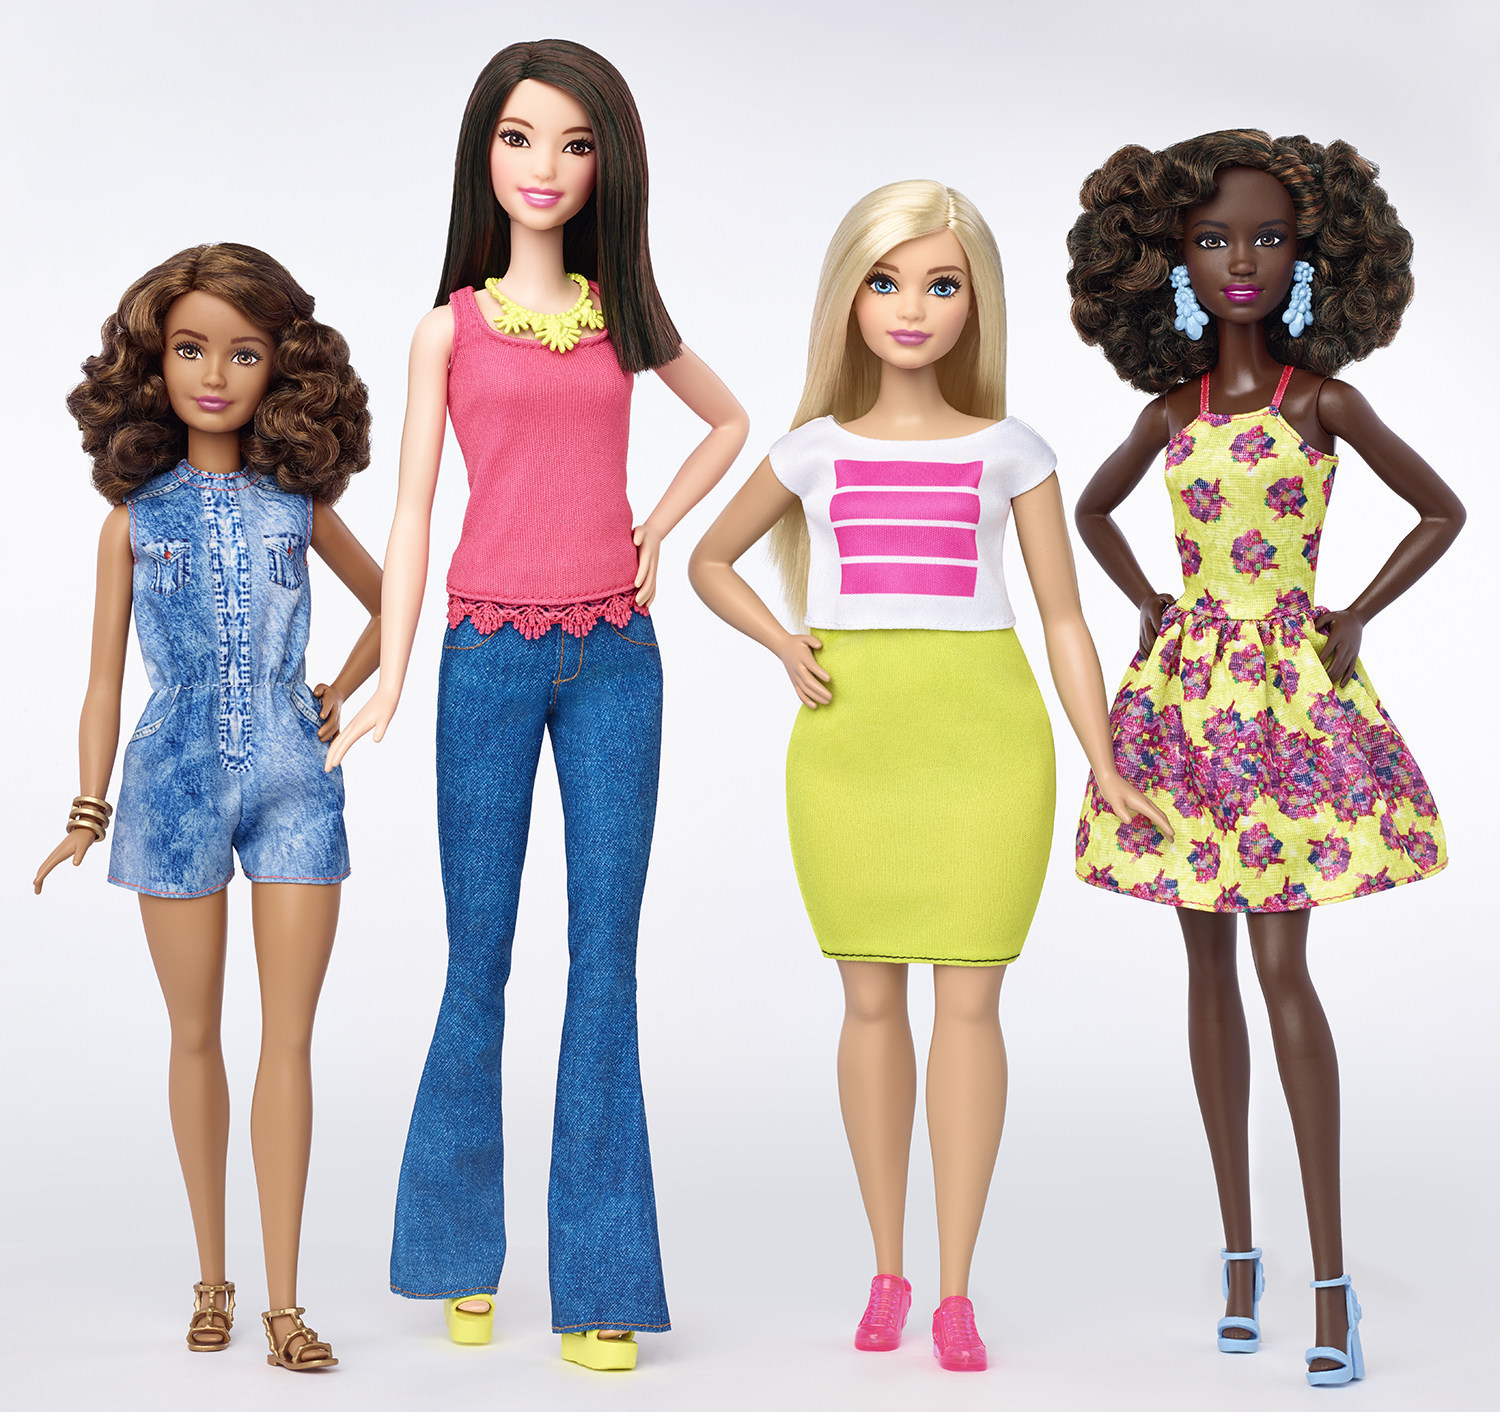 Barbie fashionistas